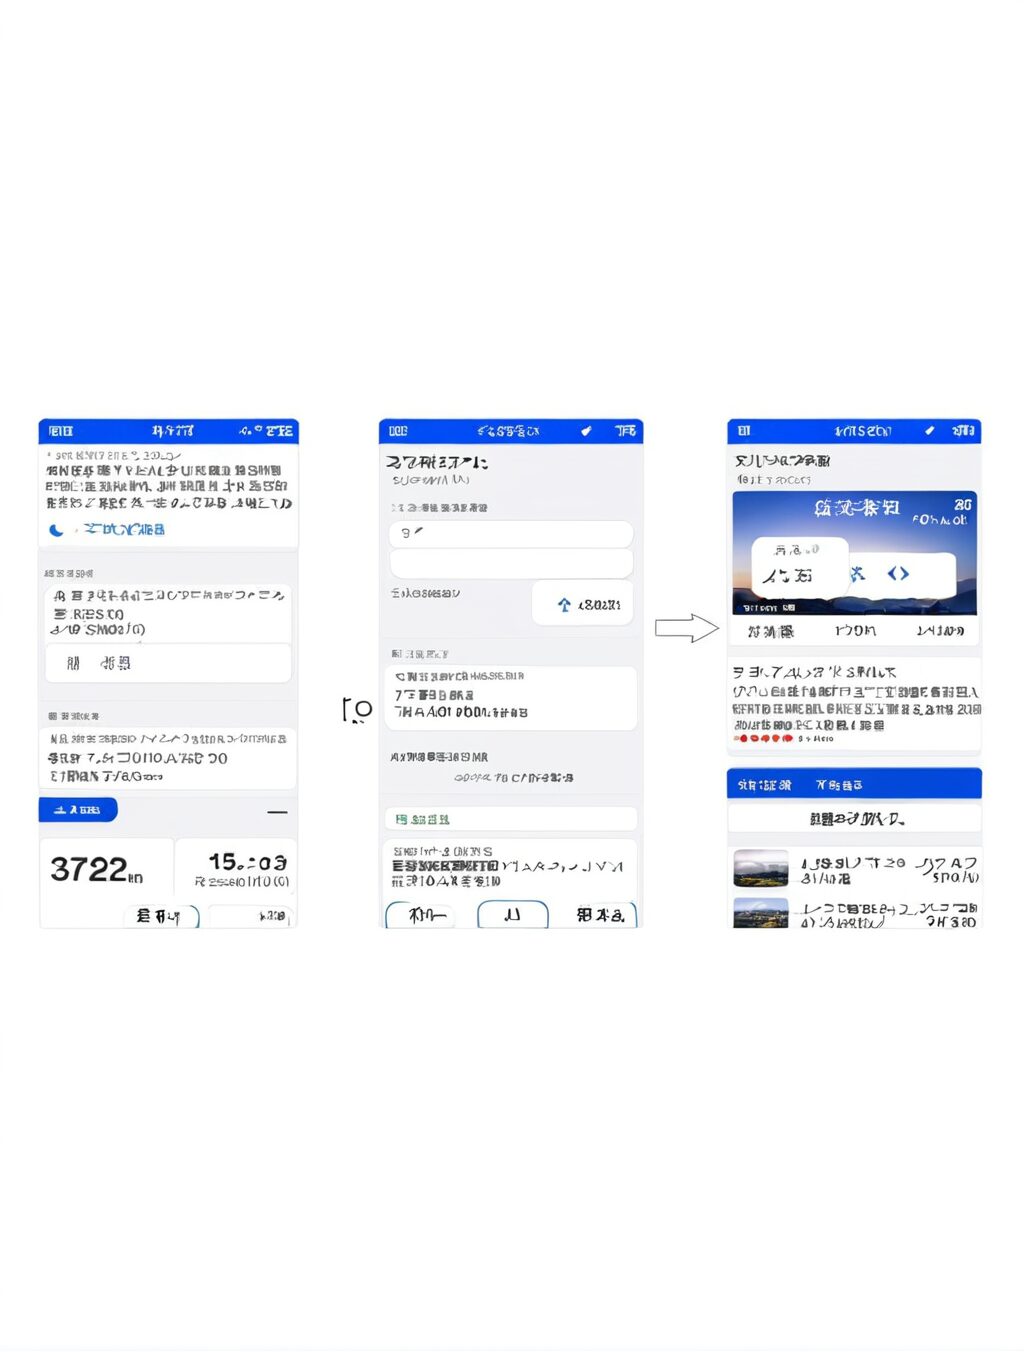 visit japan アプリ 登録